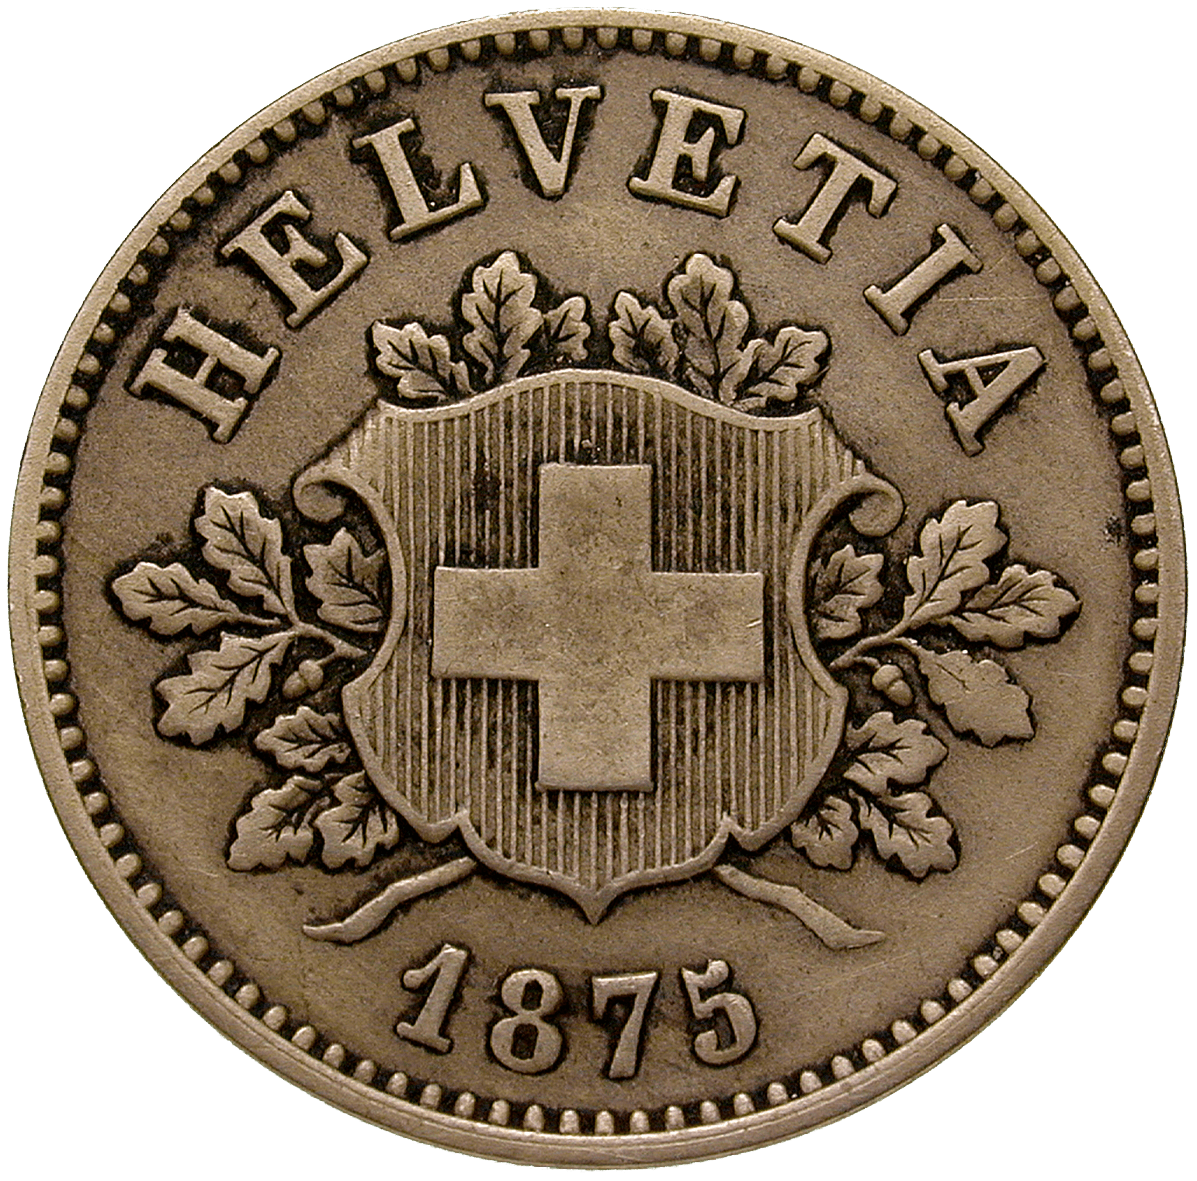 Swiss Confederation, 10 Rappen 1875 (obverse)